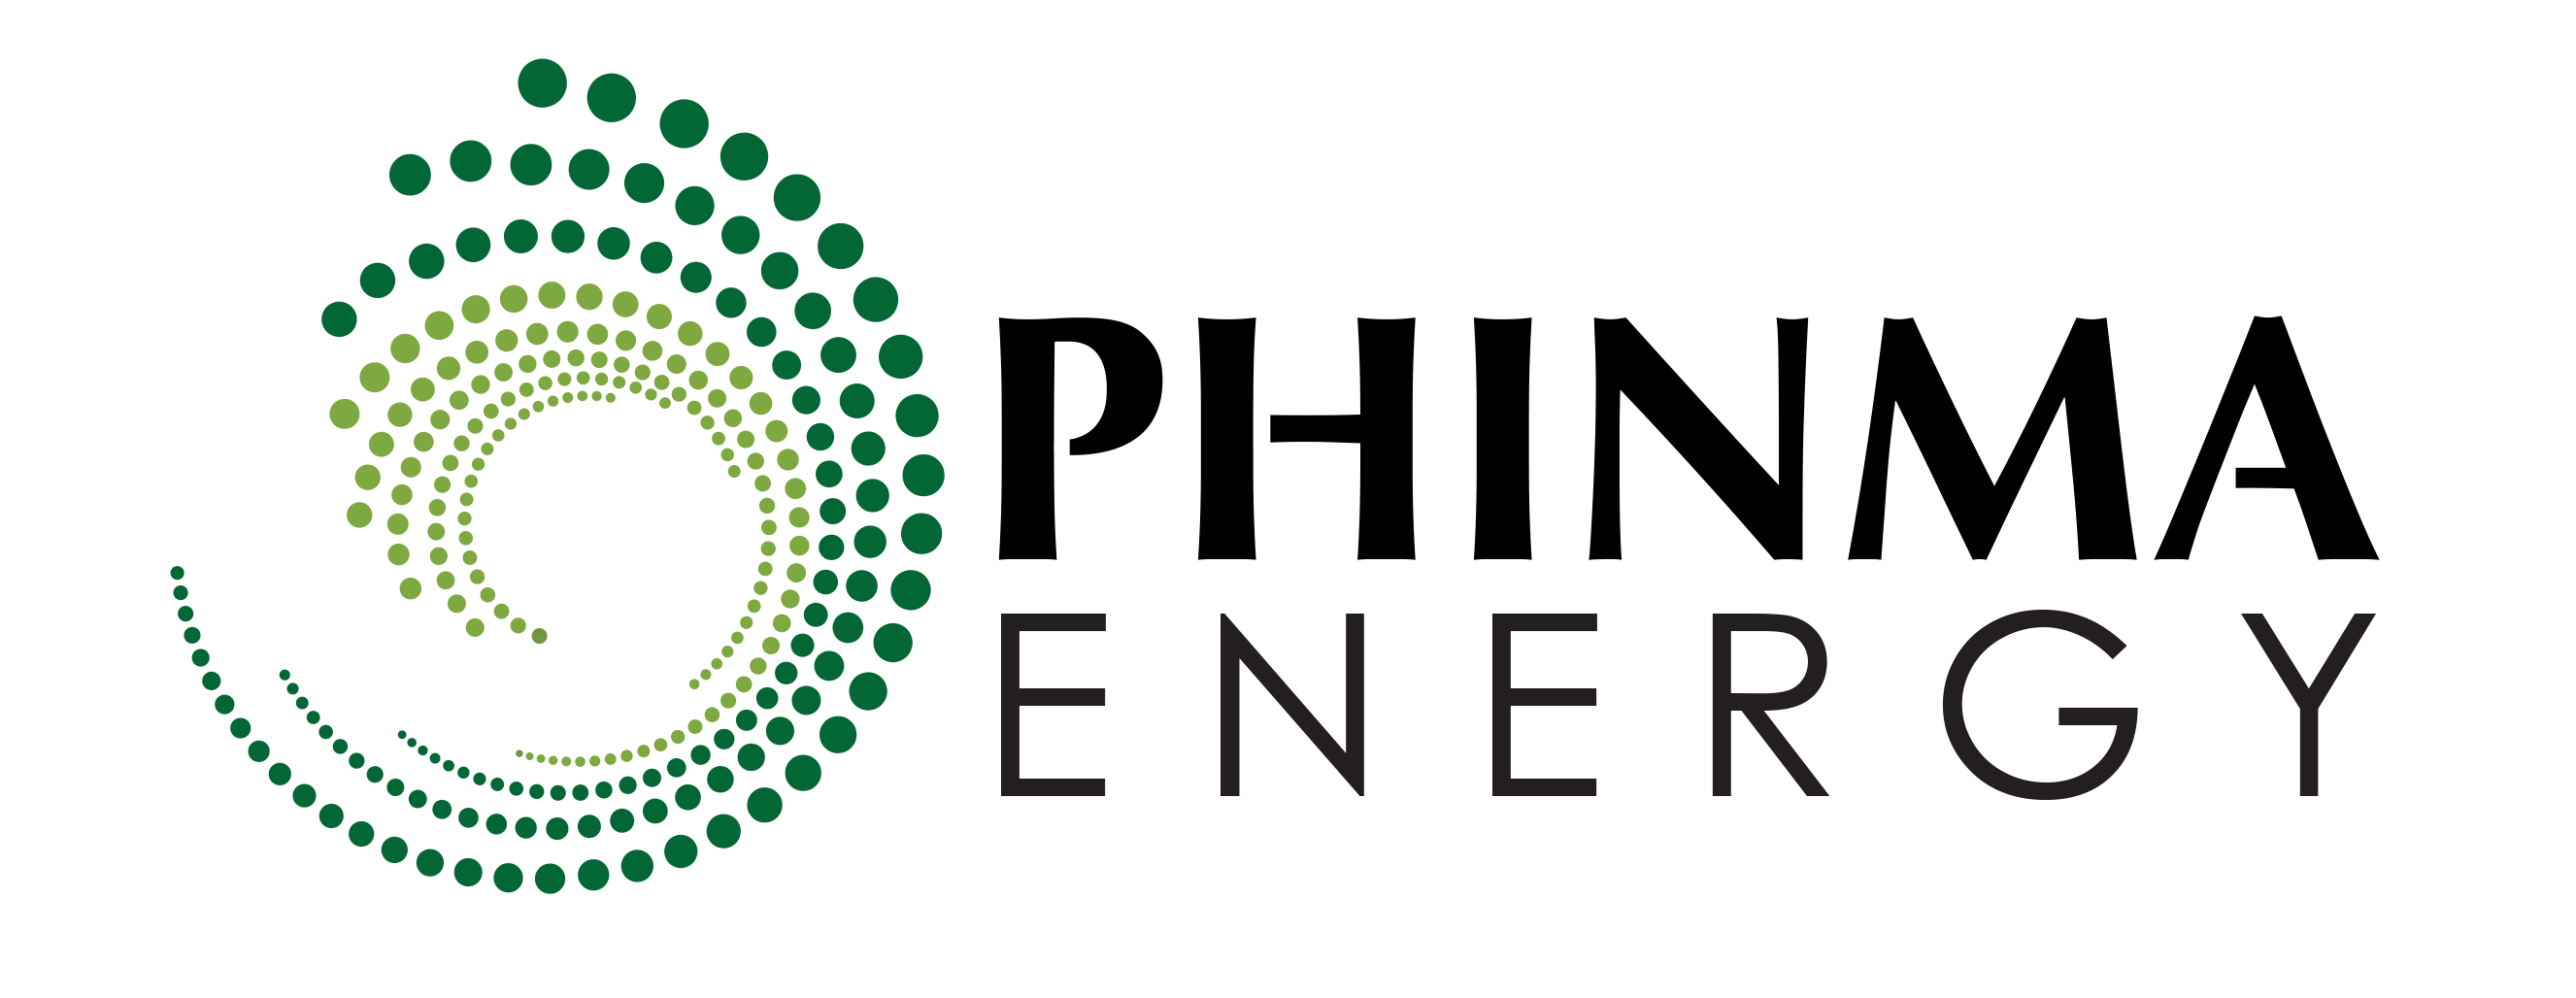 1 Energy Logo - PHINMA Energy Corporation